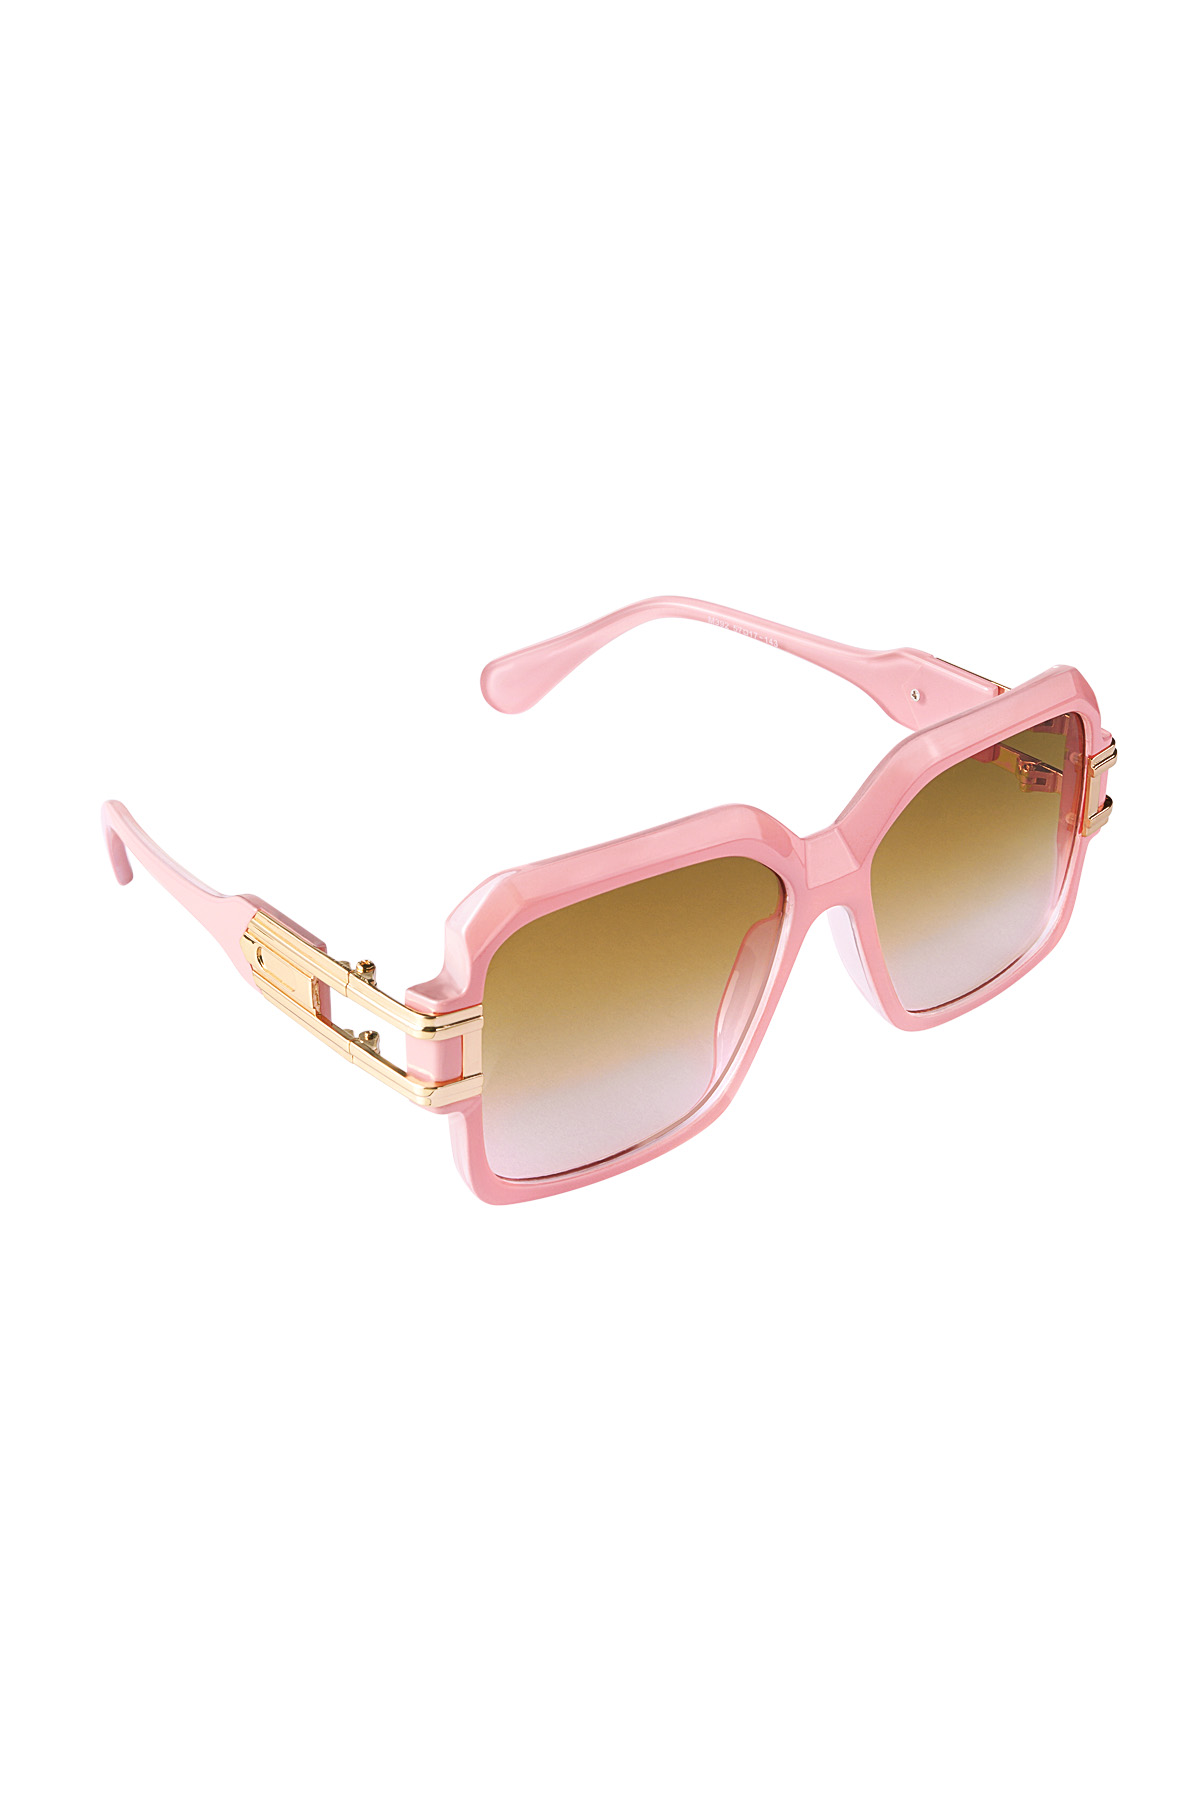 Cool frame sunglasses - pink